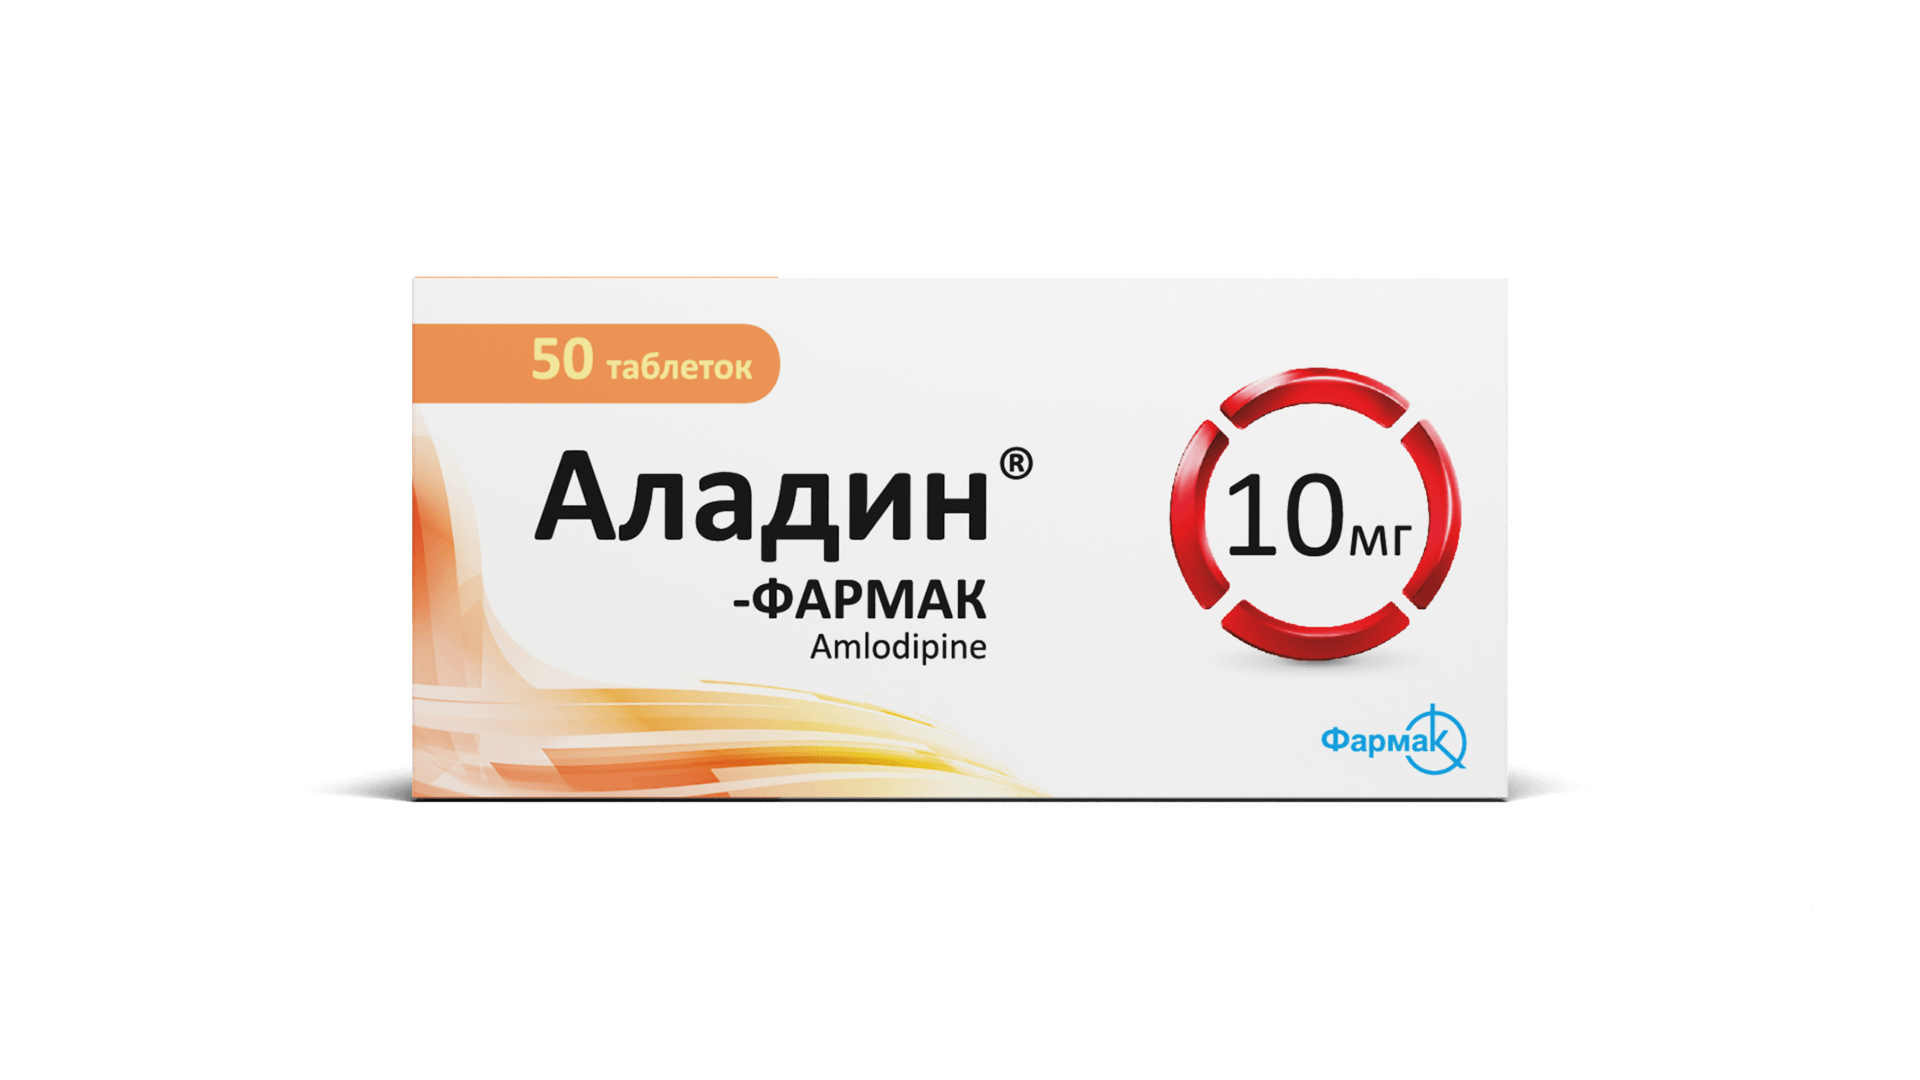 Аладин – Фармак 10 мг (5)